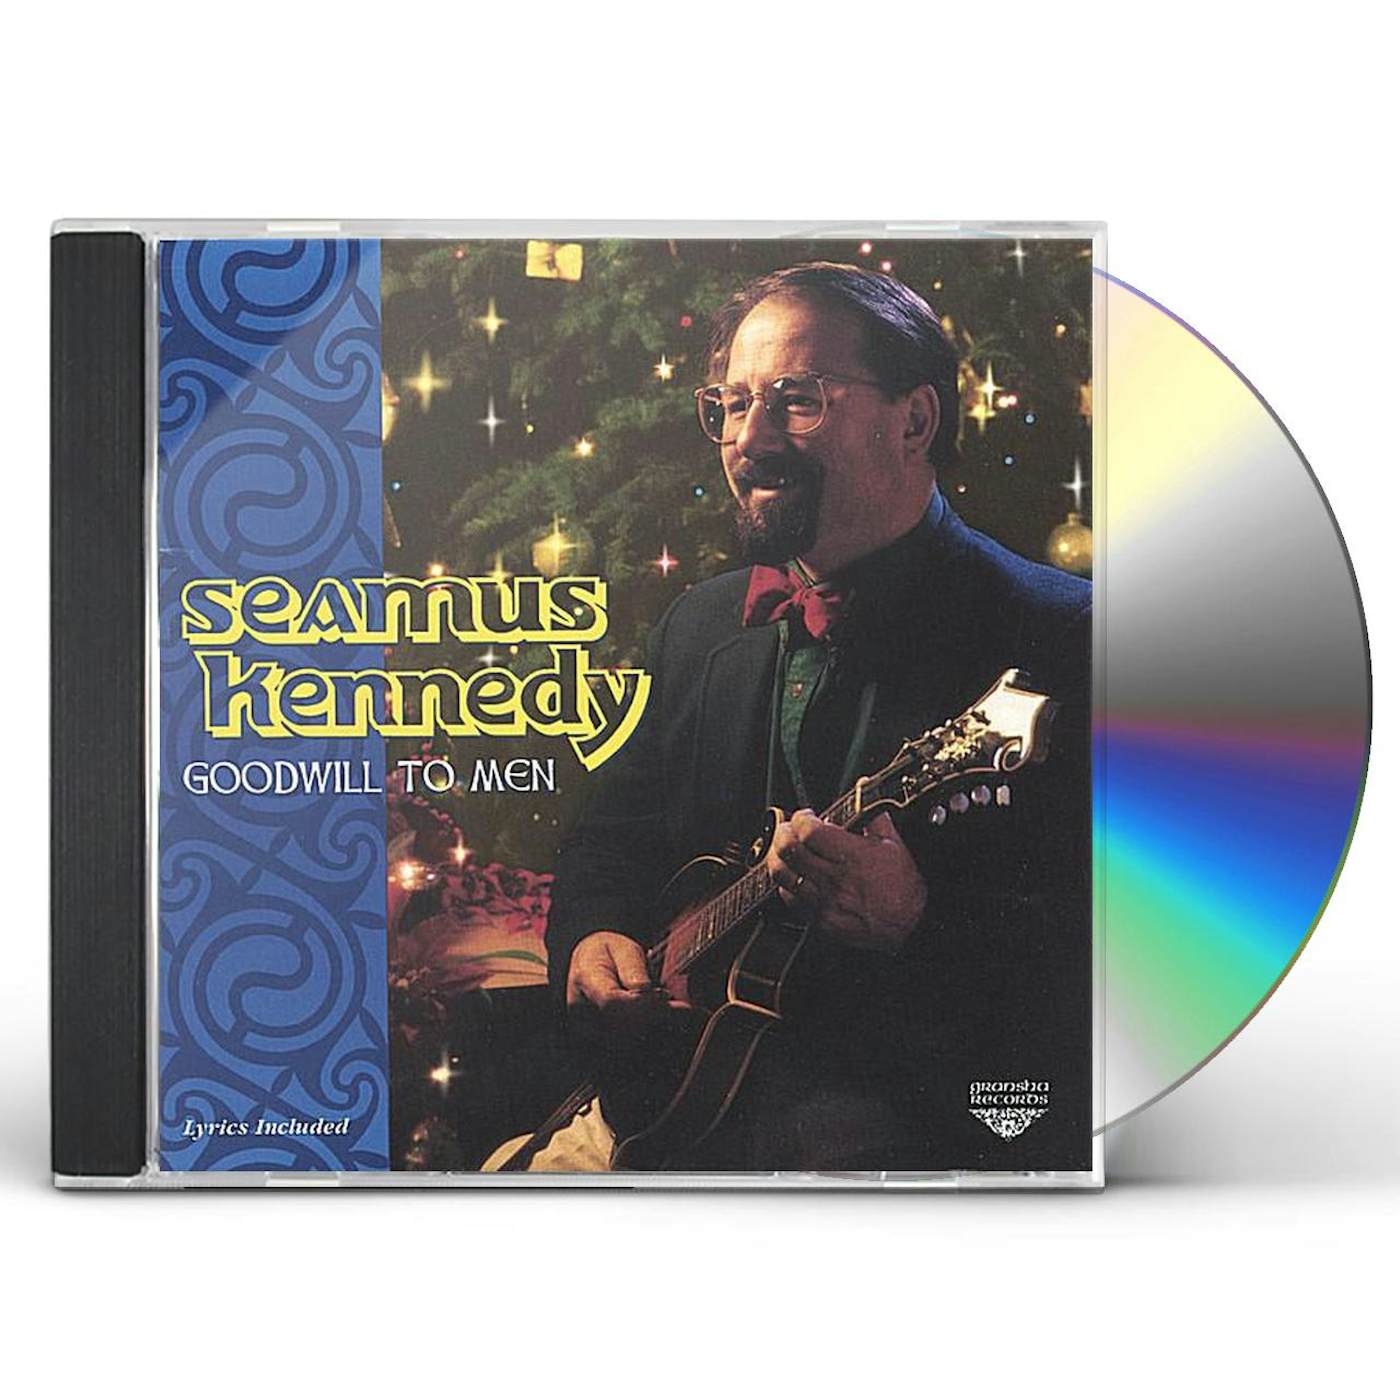 Seamus Kennedy GOODWILL TO MEN CD